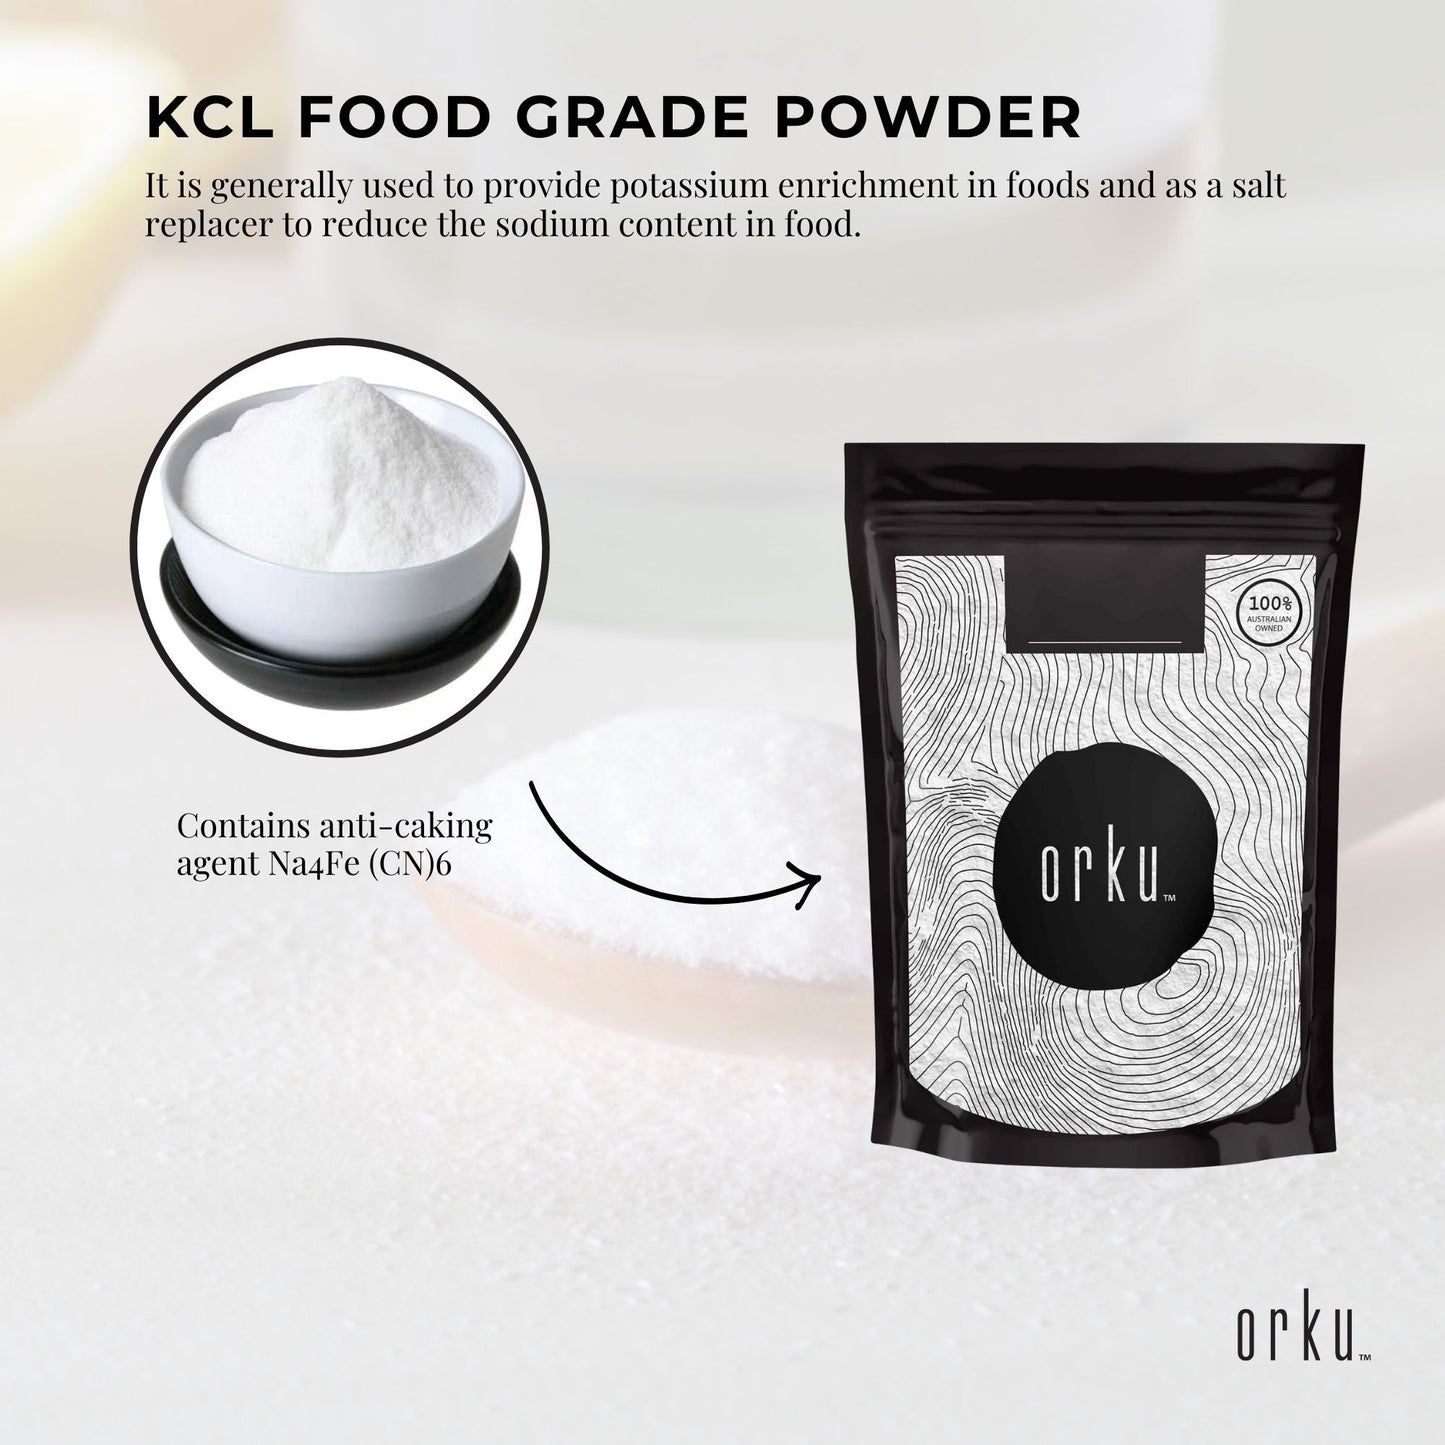 2Kg Potassium Chloride Powder - Pure E508 Food Grade Salt Substitute Supplement